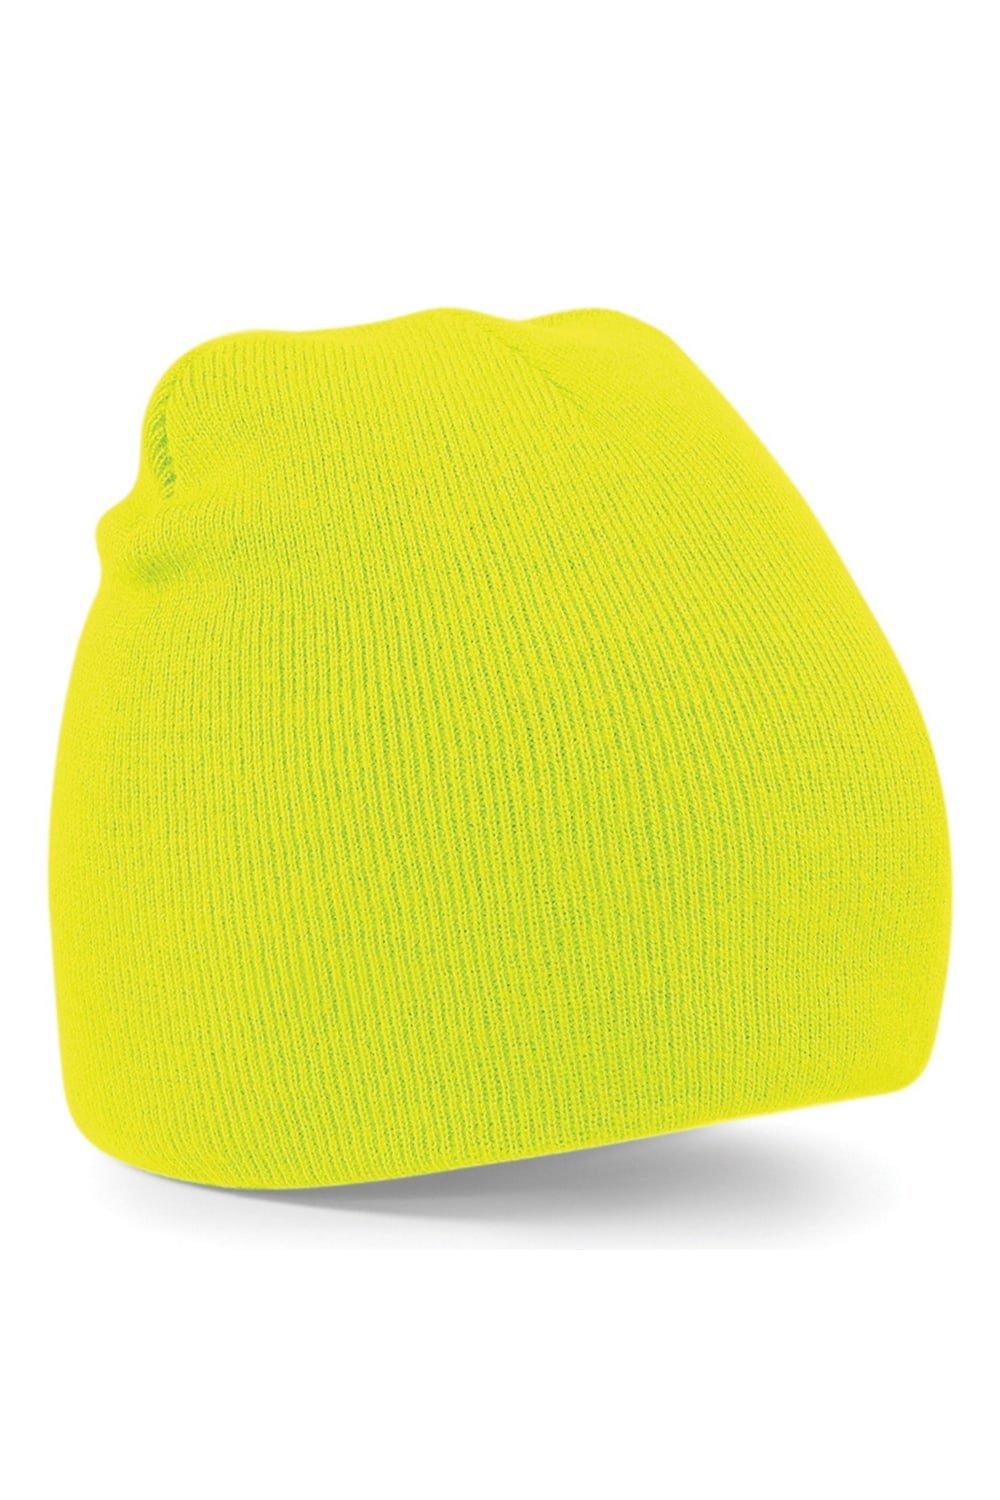 хюгге бини beechfield желтый Простая базовая вязаная зимняя шапка-бини Beechfield, желтый